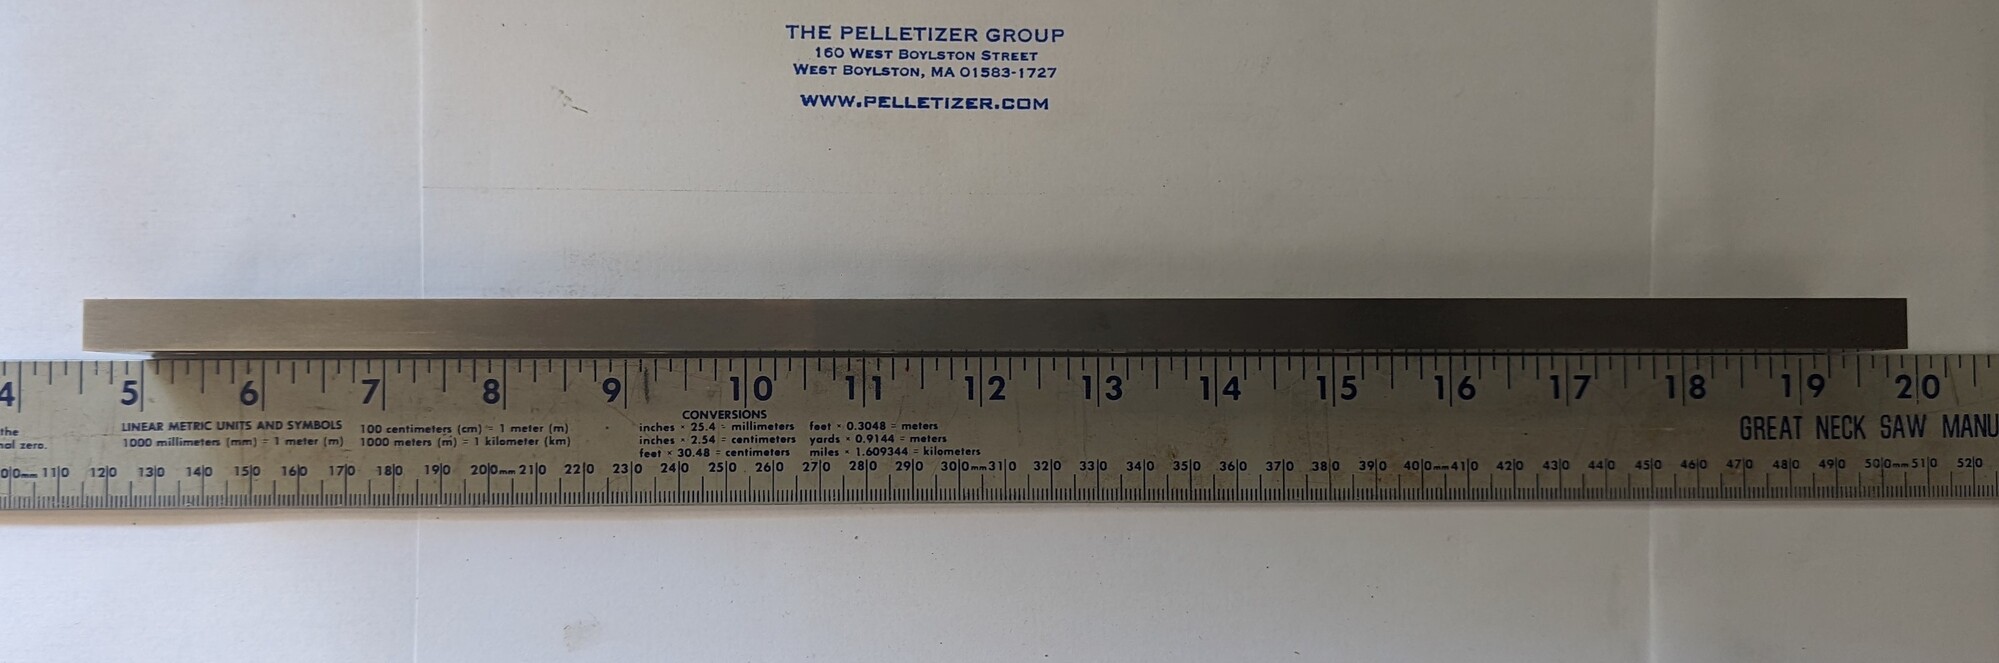 CUMBERLAND 12 MARATHON Pelletizer Parts - New | The Pelletizer Group